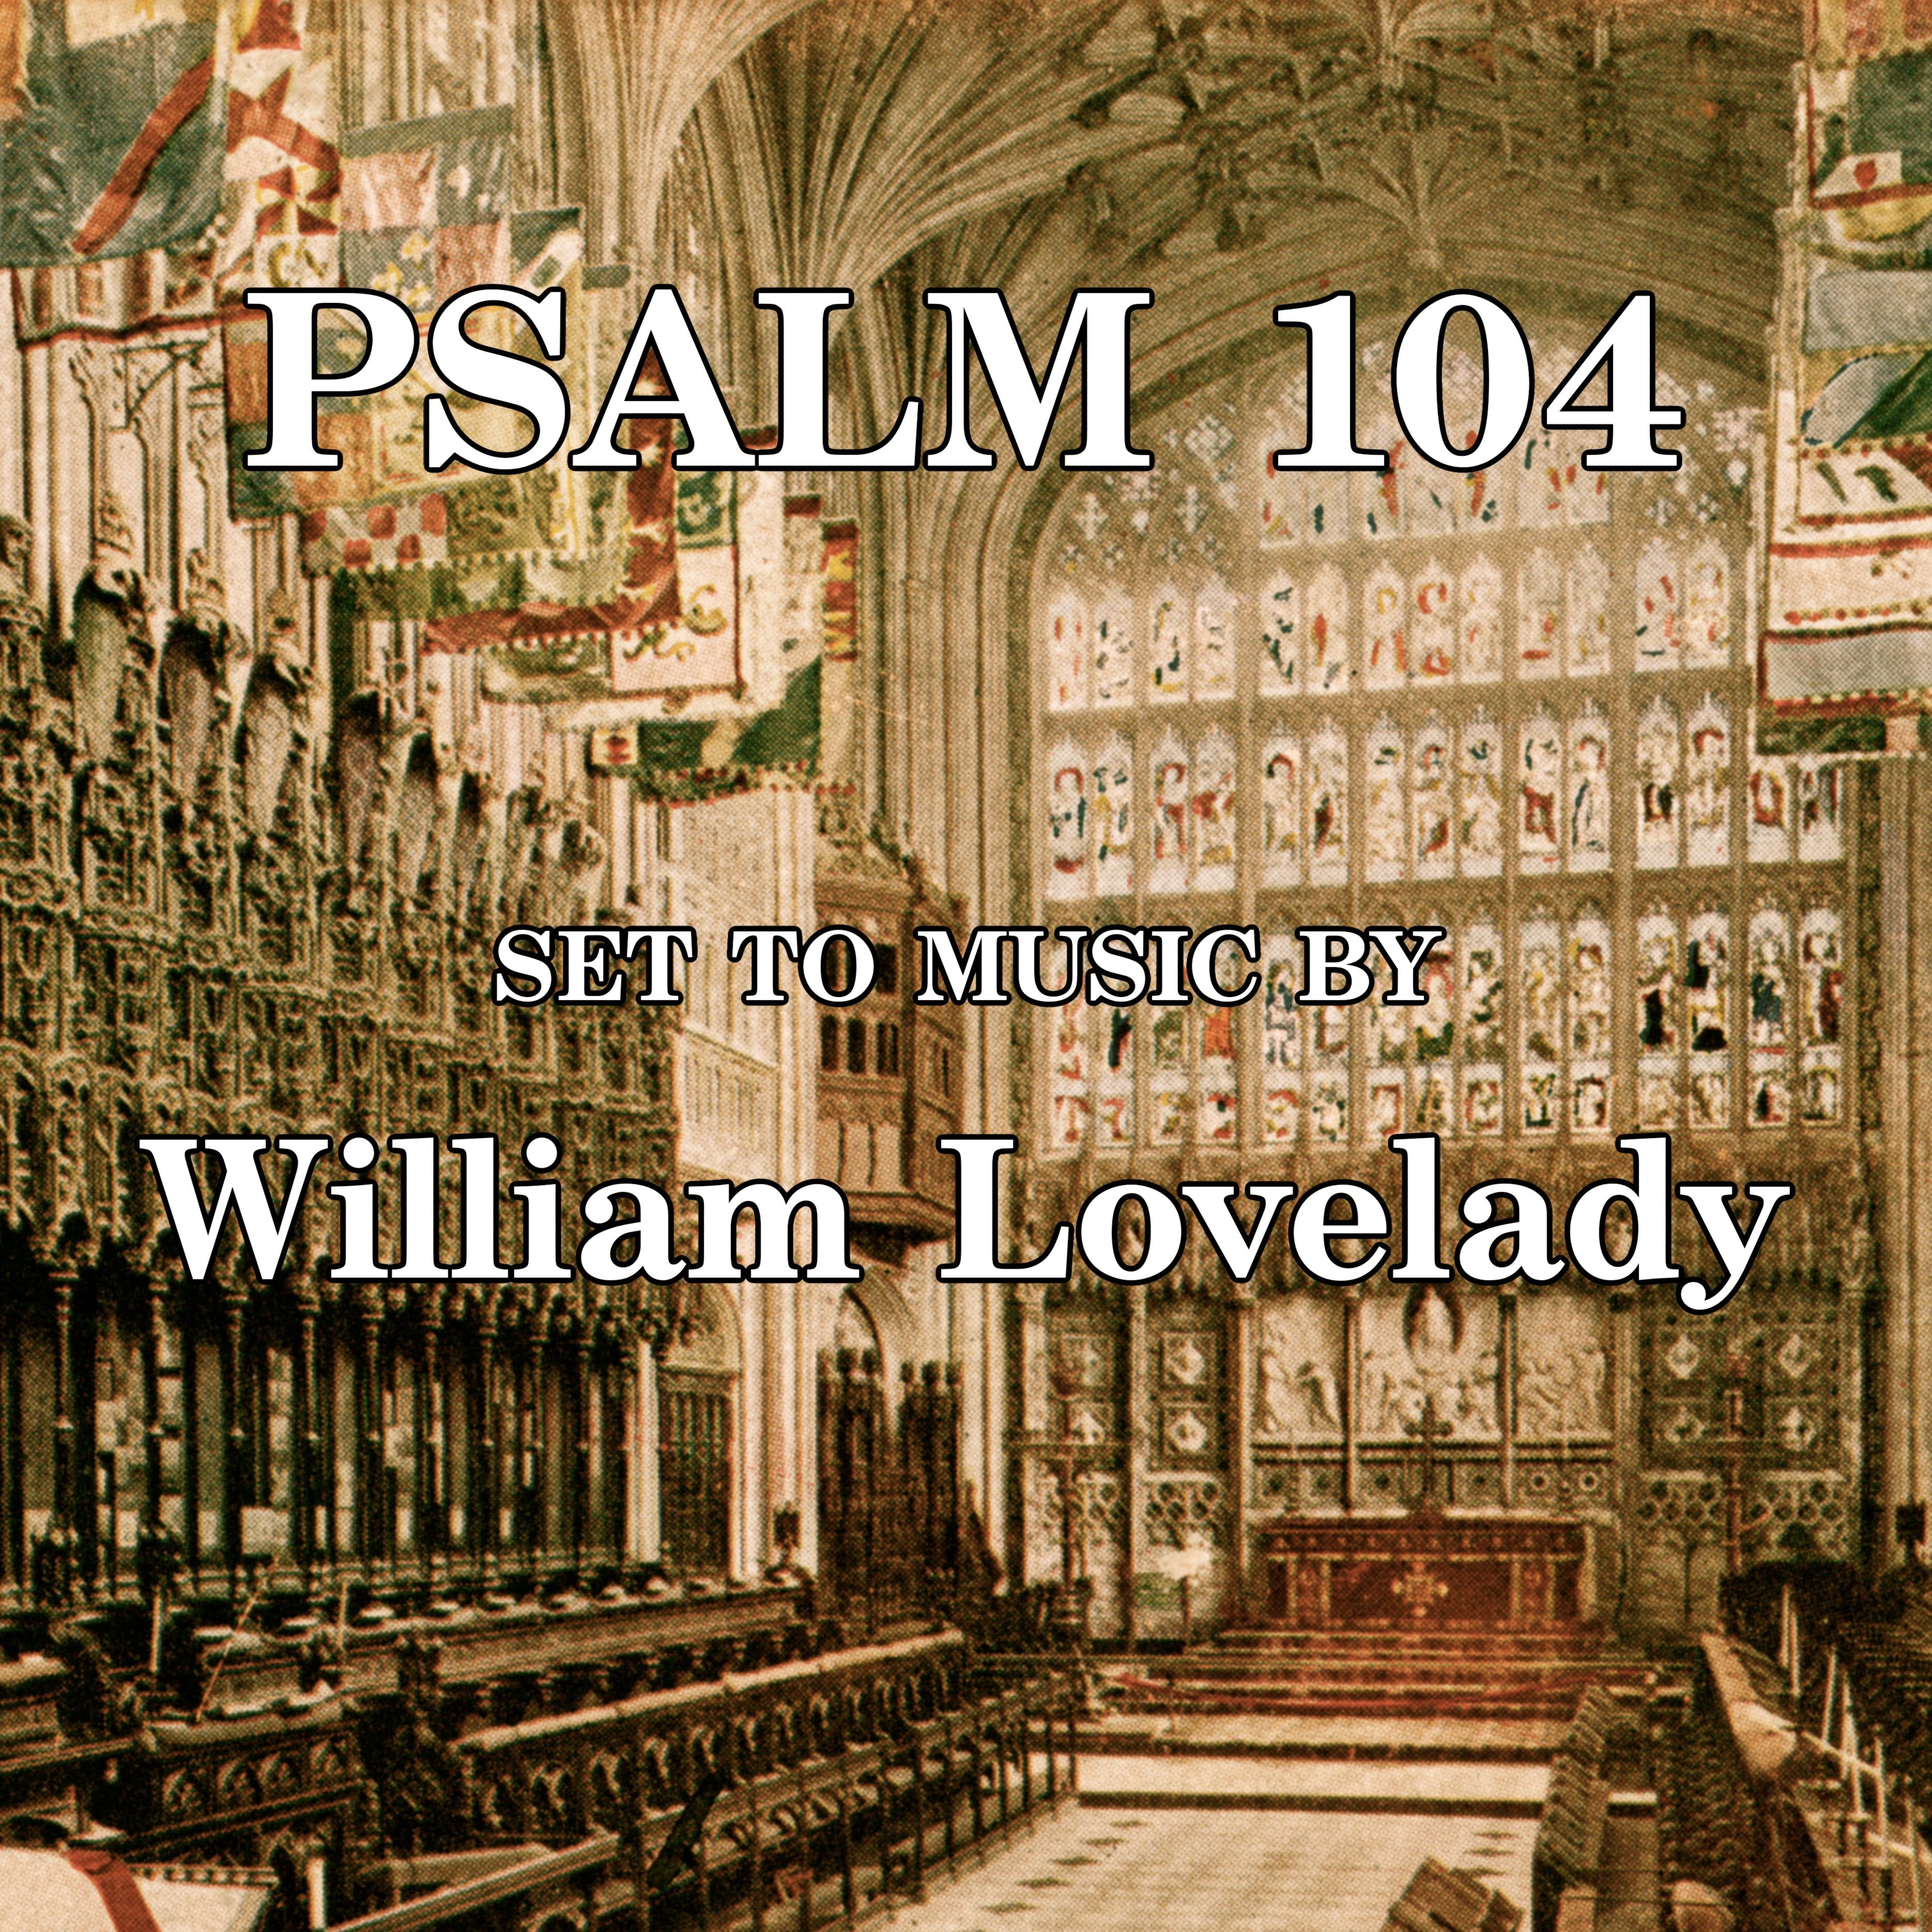 PSALM 104 recording